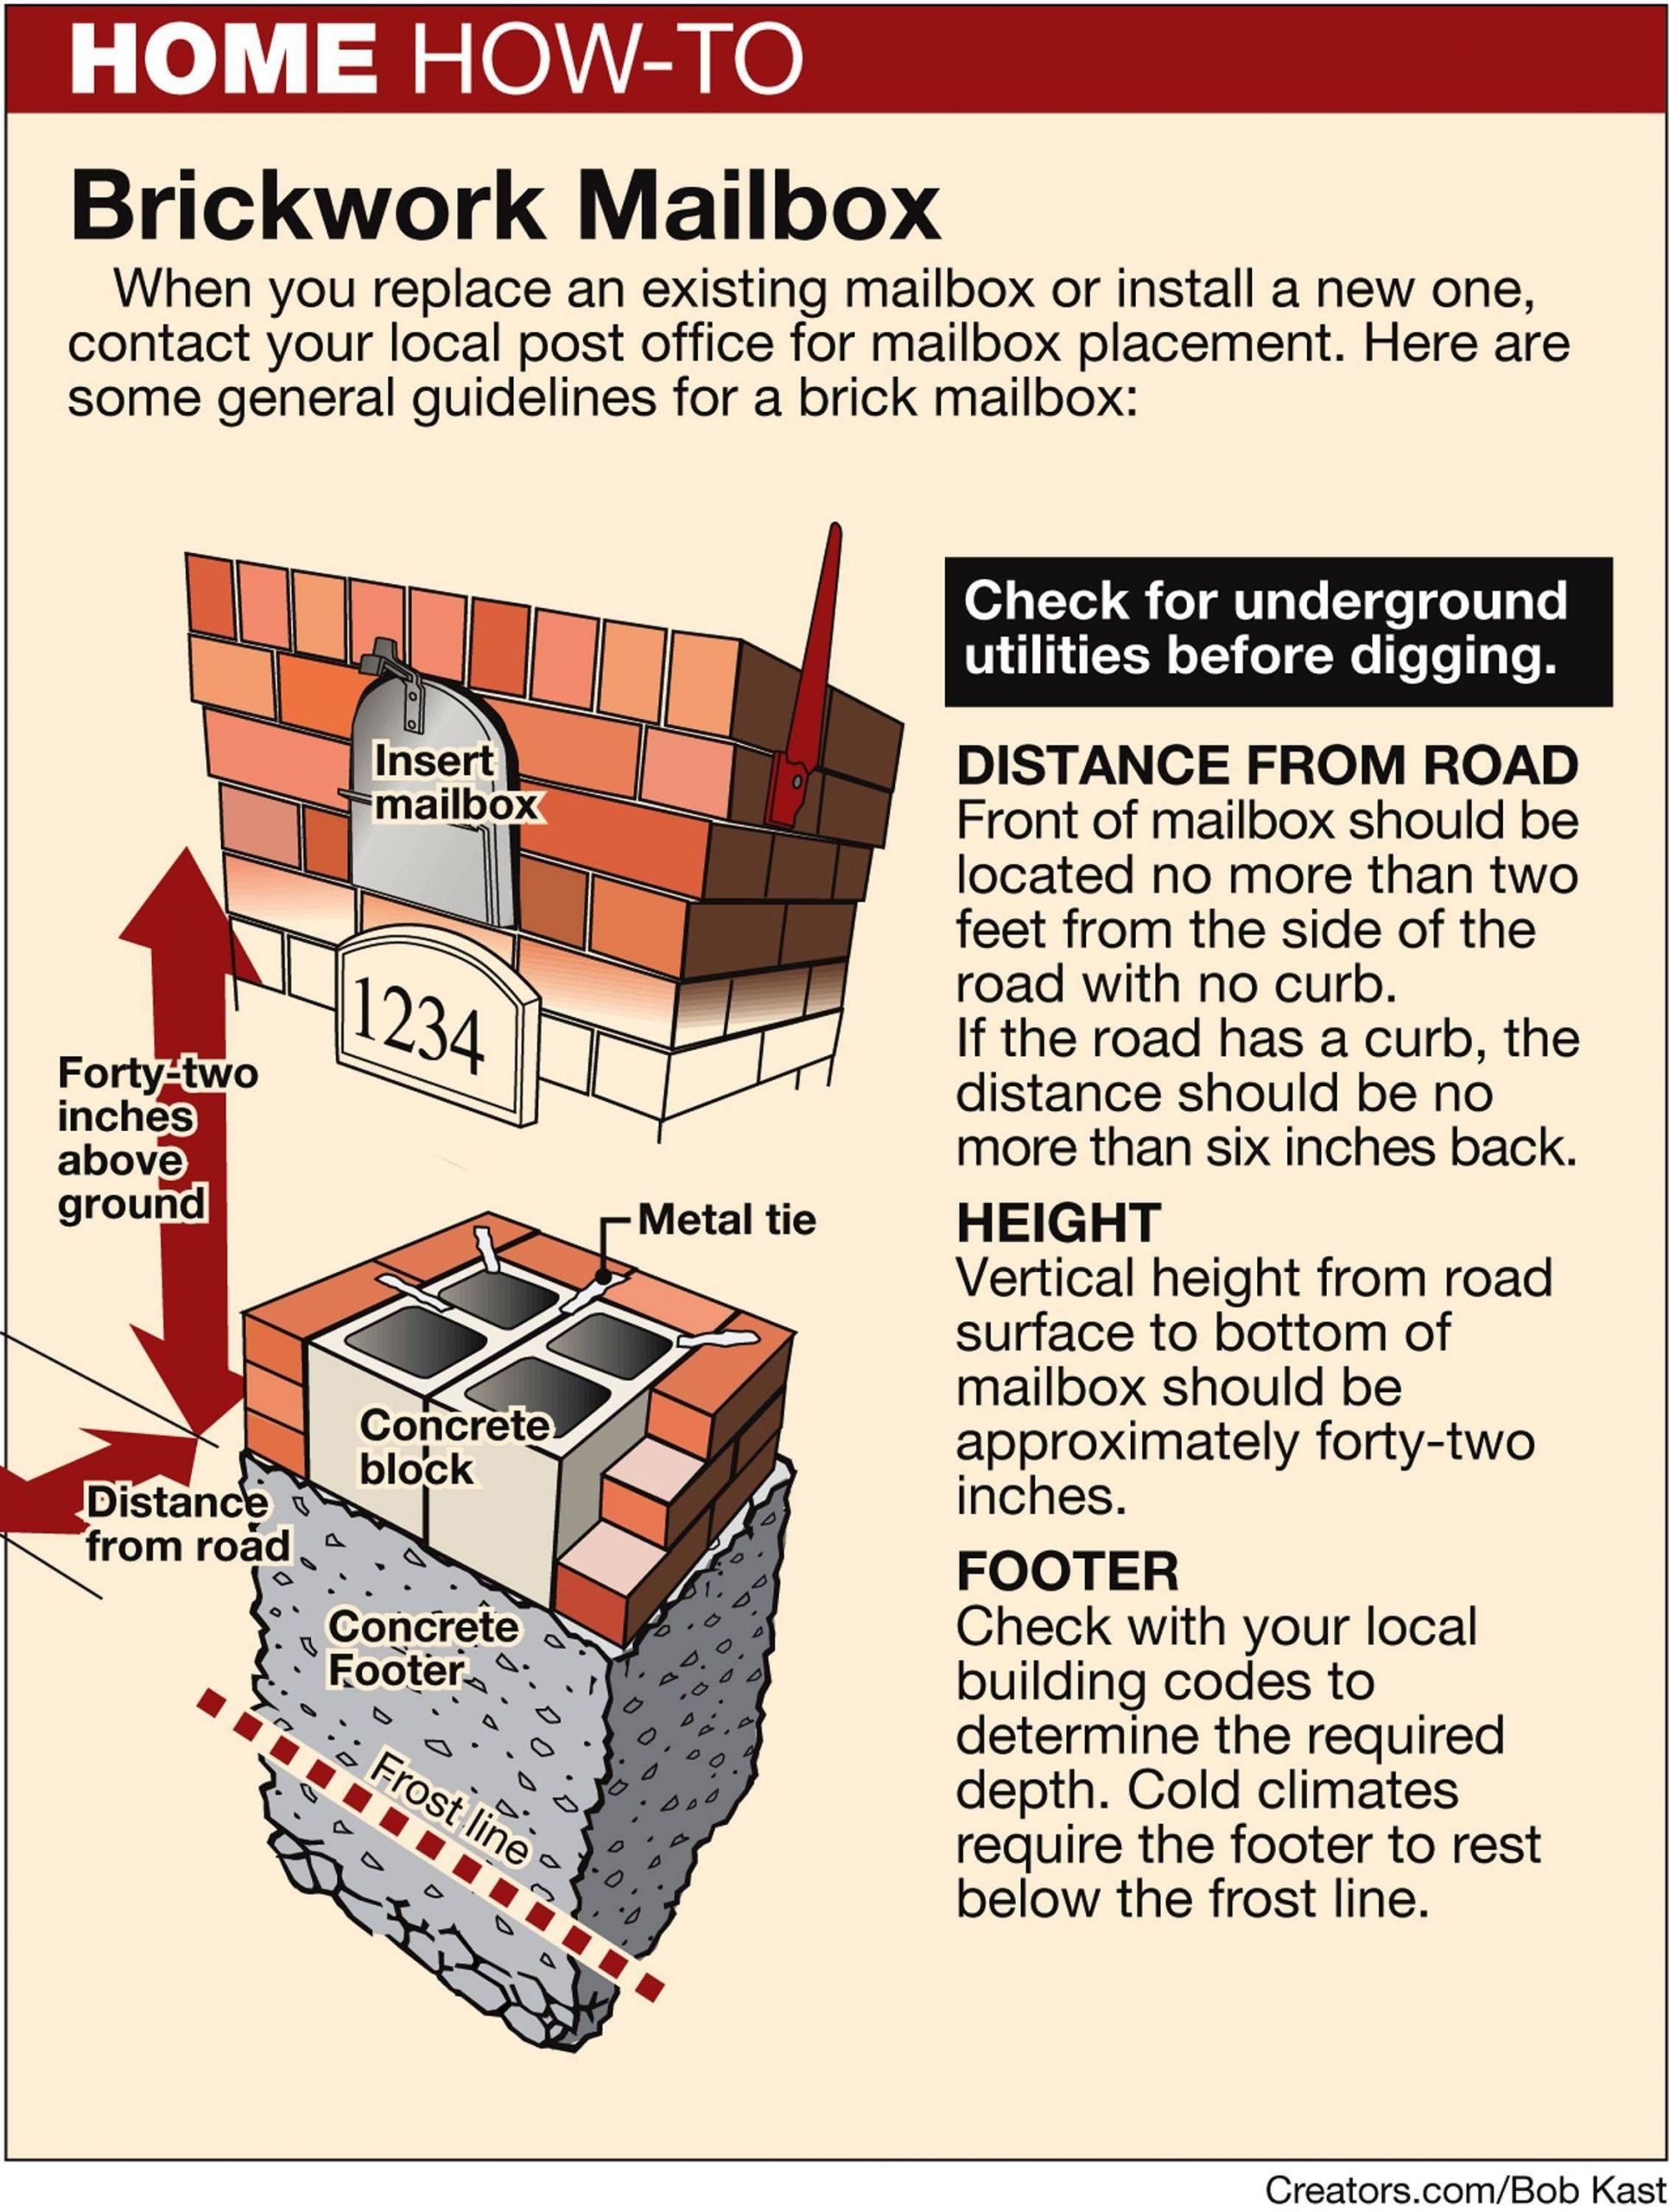 DIY Brick Mailbox
 How to build a brick mailbox yourself